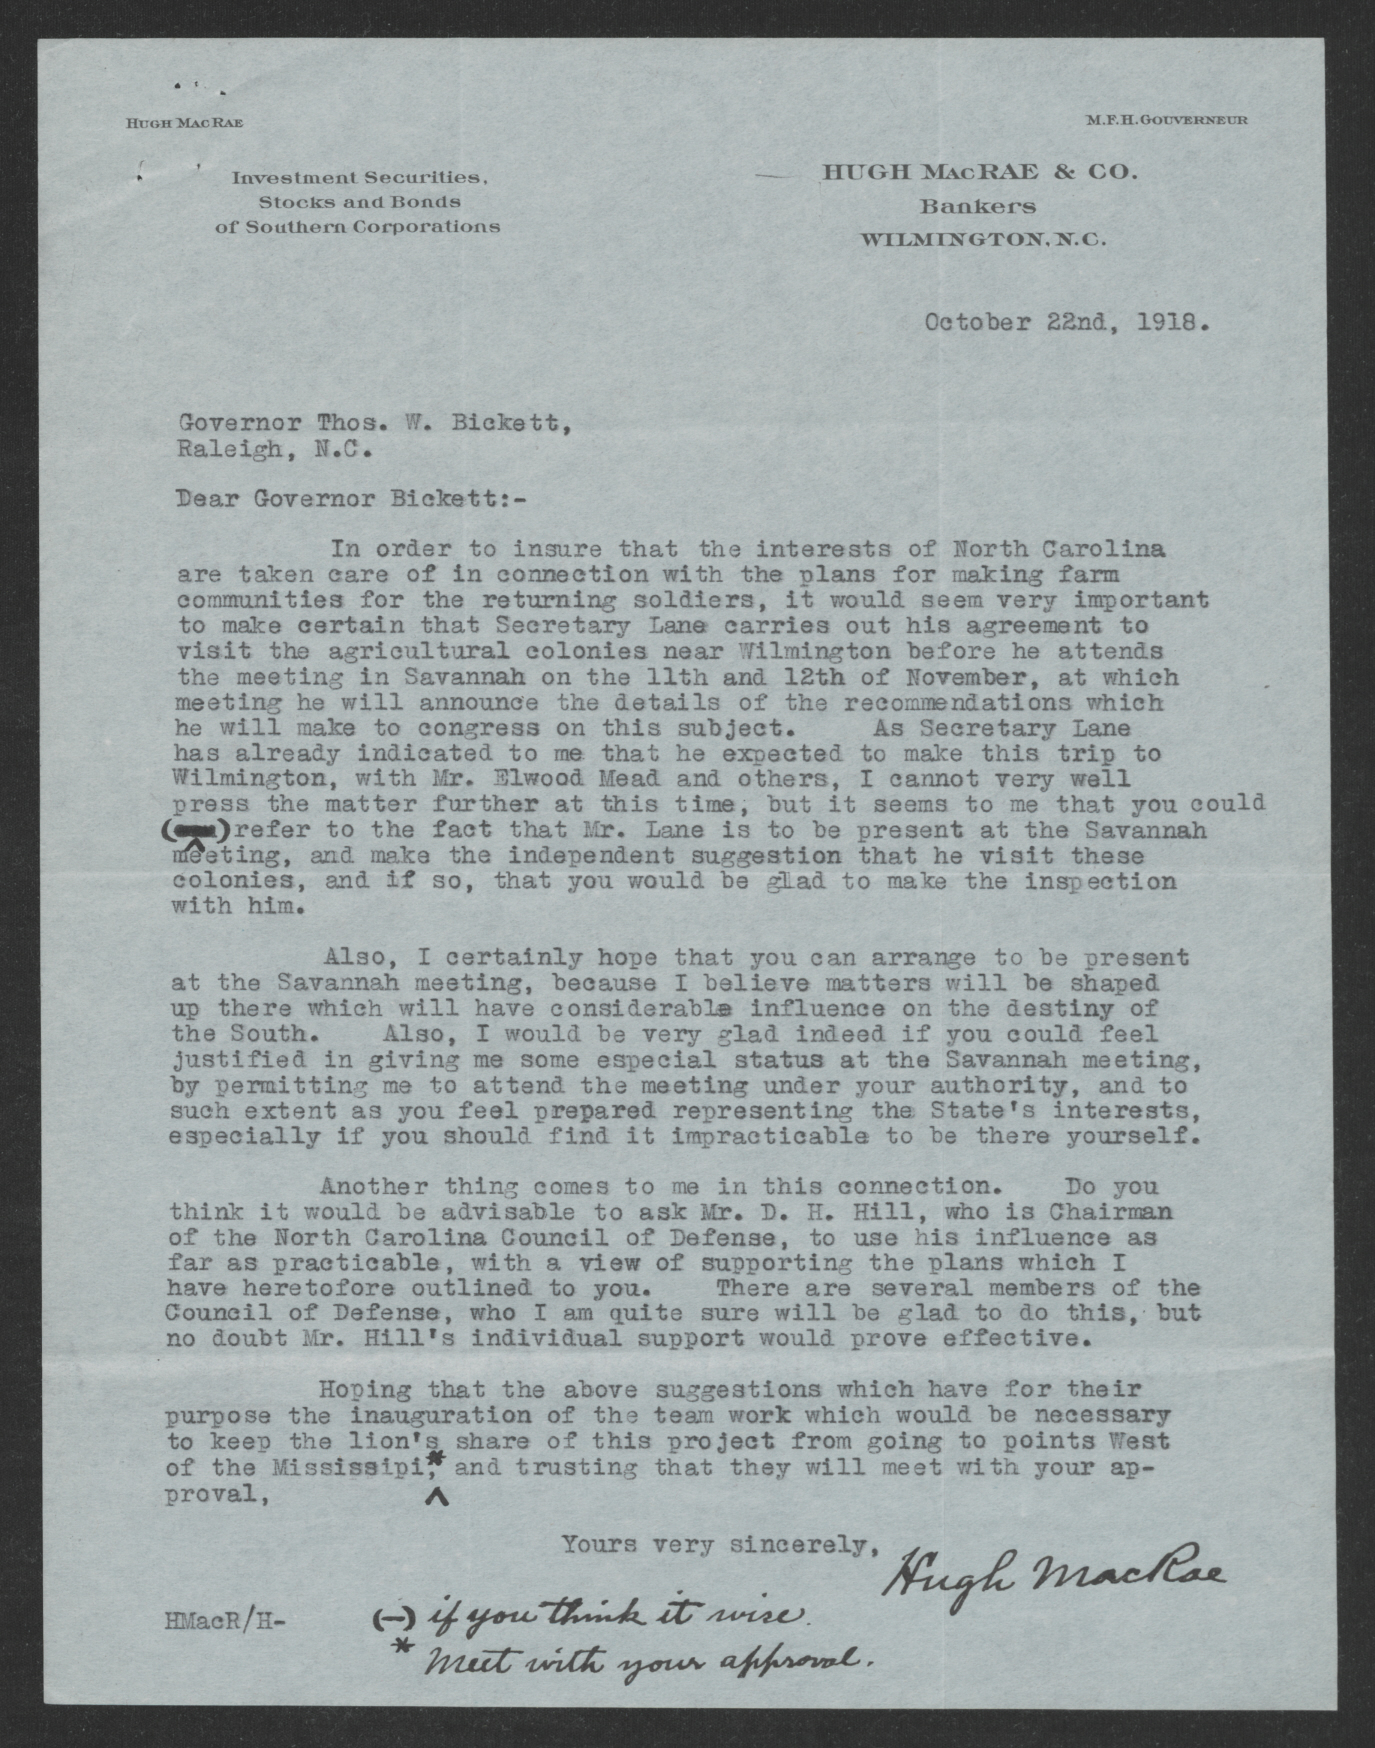 Letter from Hugh MacRae to Thomas W. Bickett, October 22, 1918